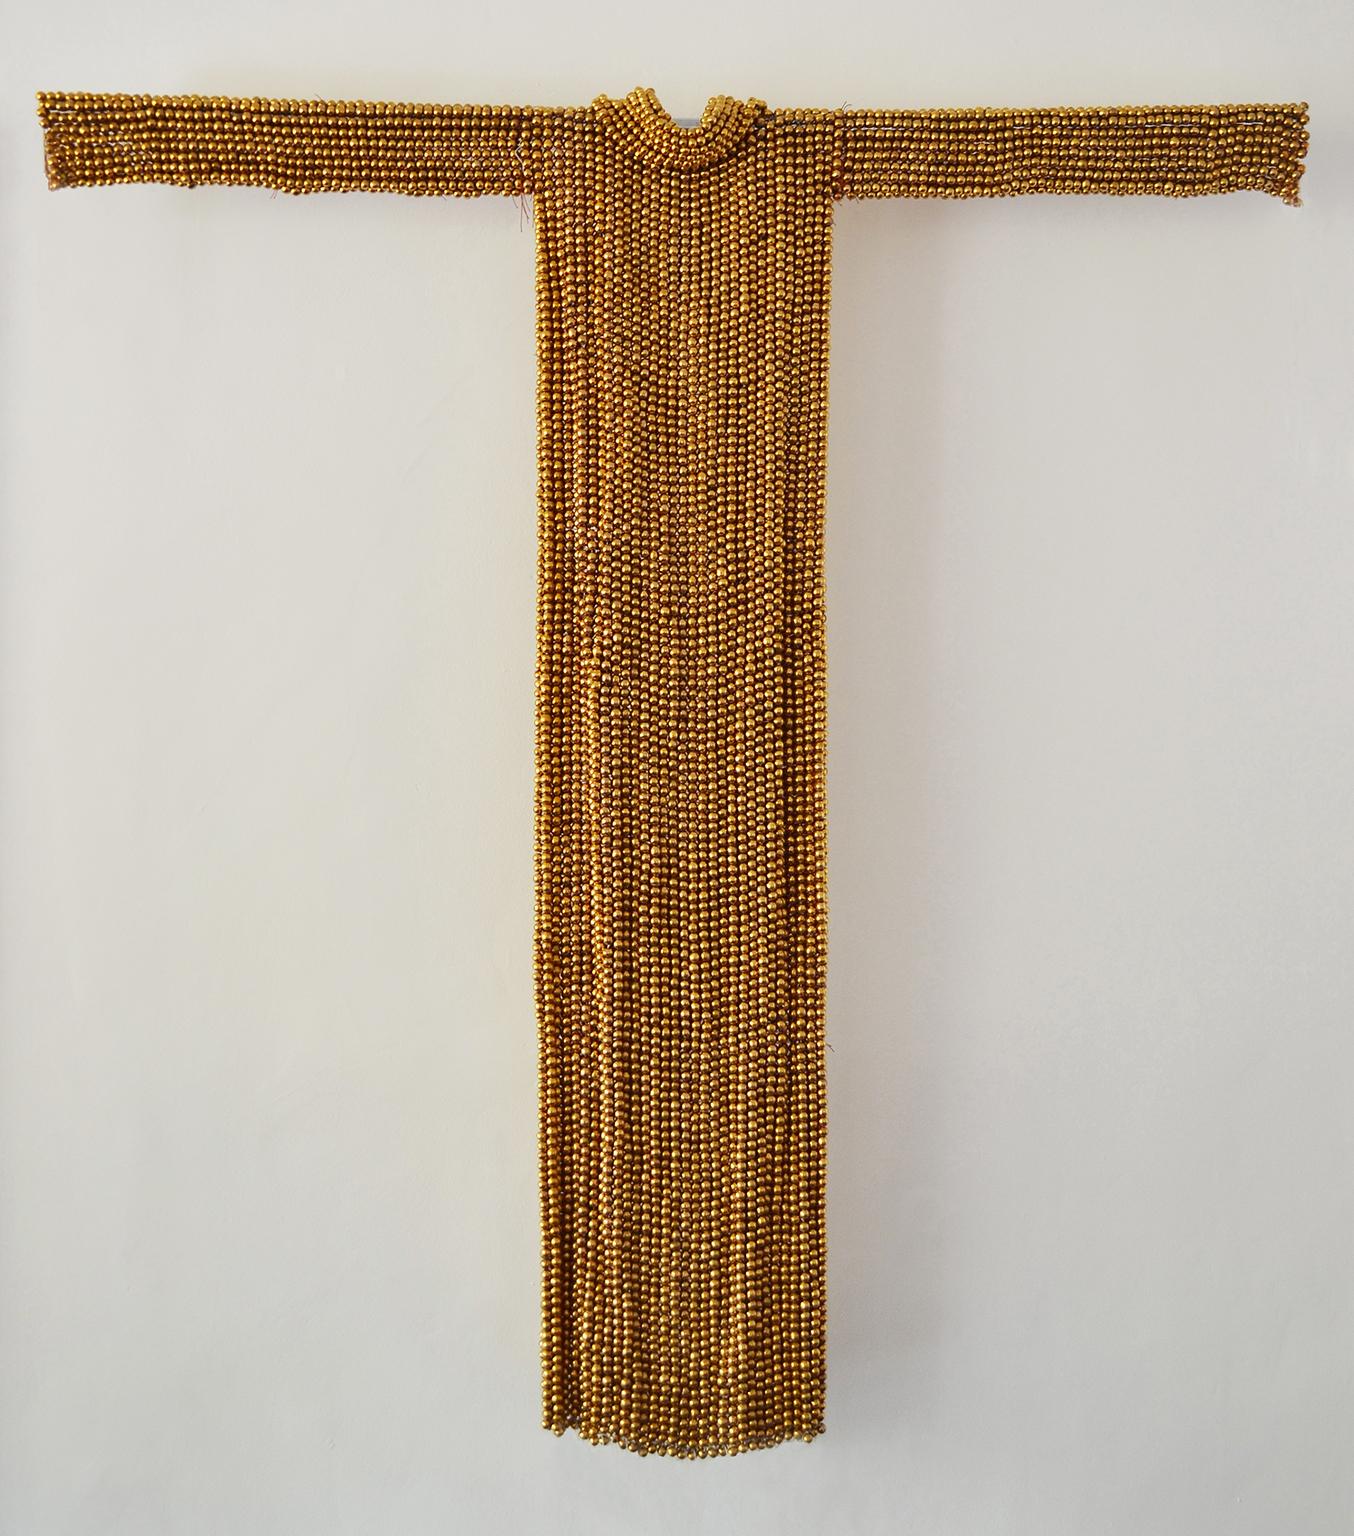 Sculpture « Vérido de Oro I ( Robe dorée) » en forme de robe à glaçure dorée en terre cuite - Mixed Media Art de Xawery Wolski